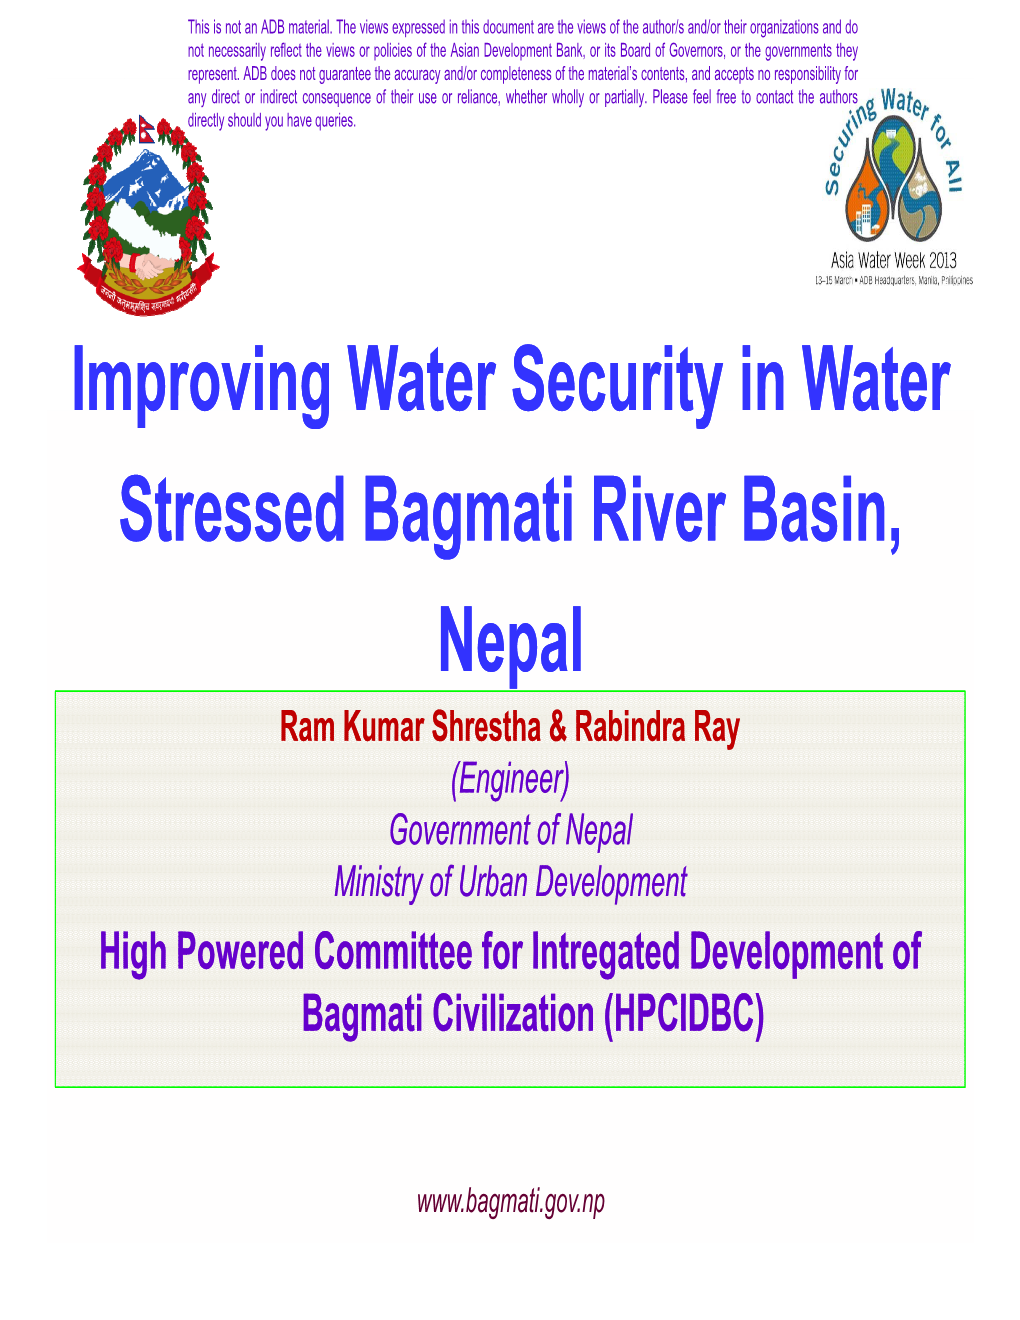 Improving Water Security in Water Stressed Bagmati River Basin In